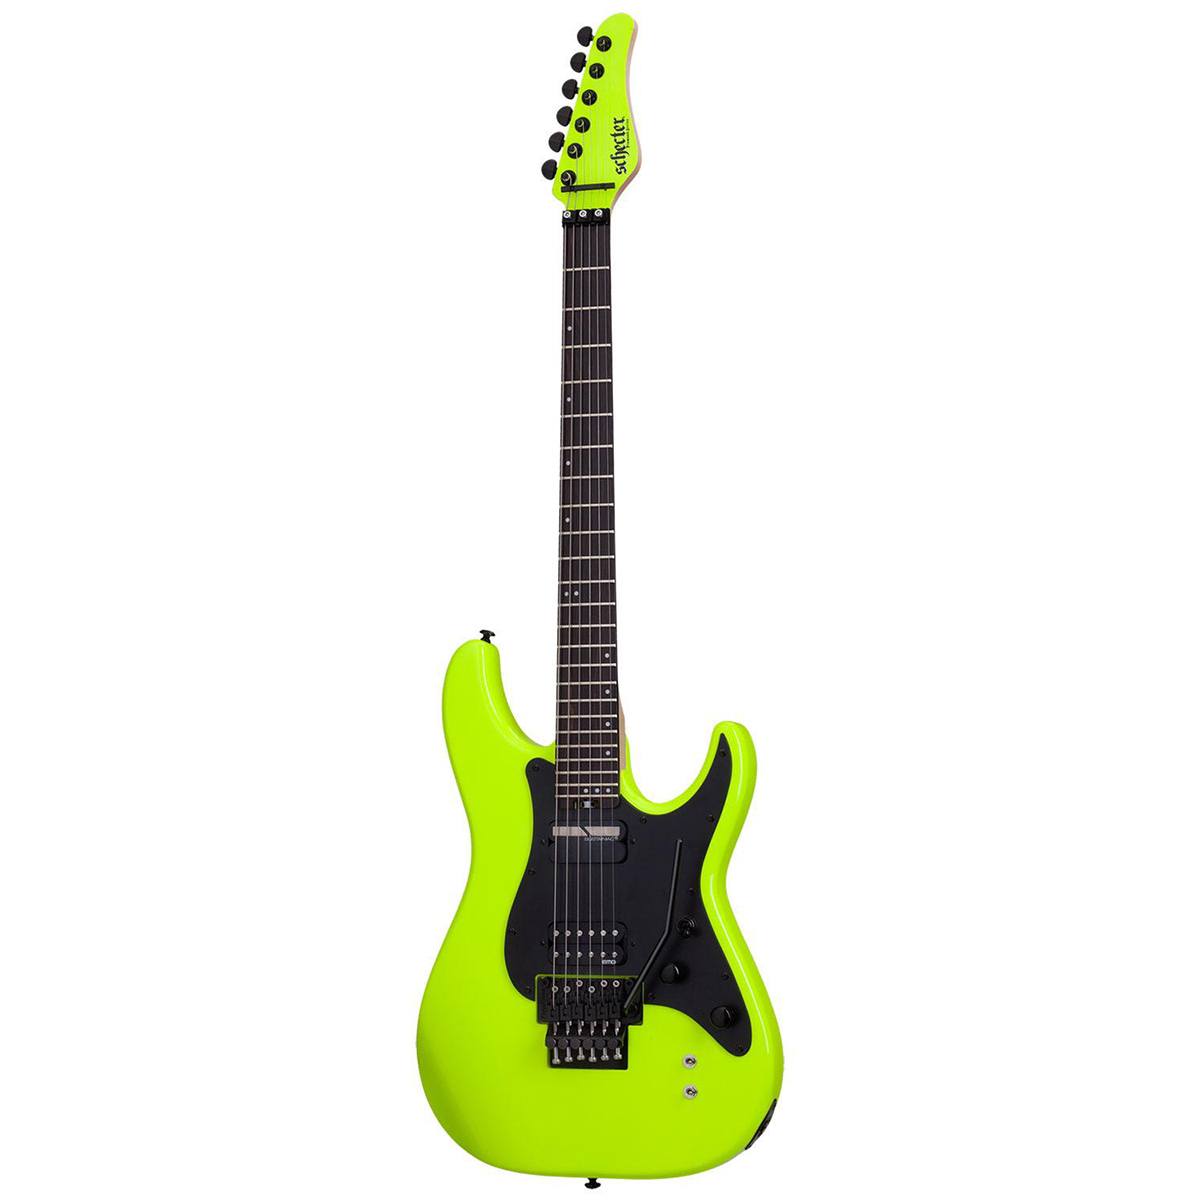 Schecter Sun Valley Super Shredder FR S Electric Guitar (Birch Green) - image 1 of 7